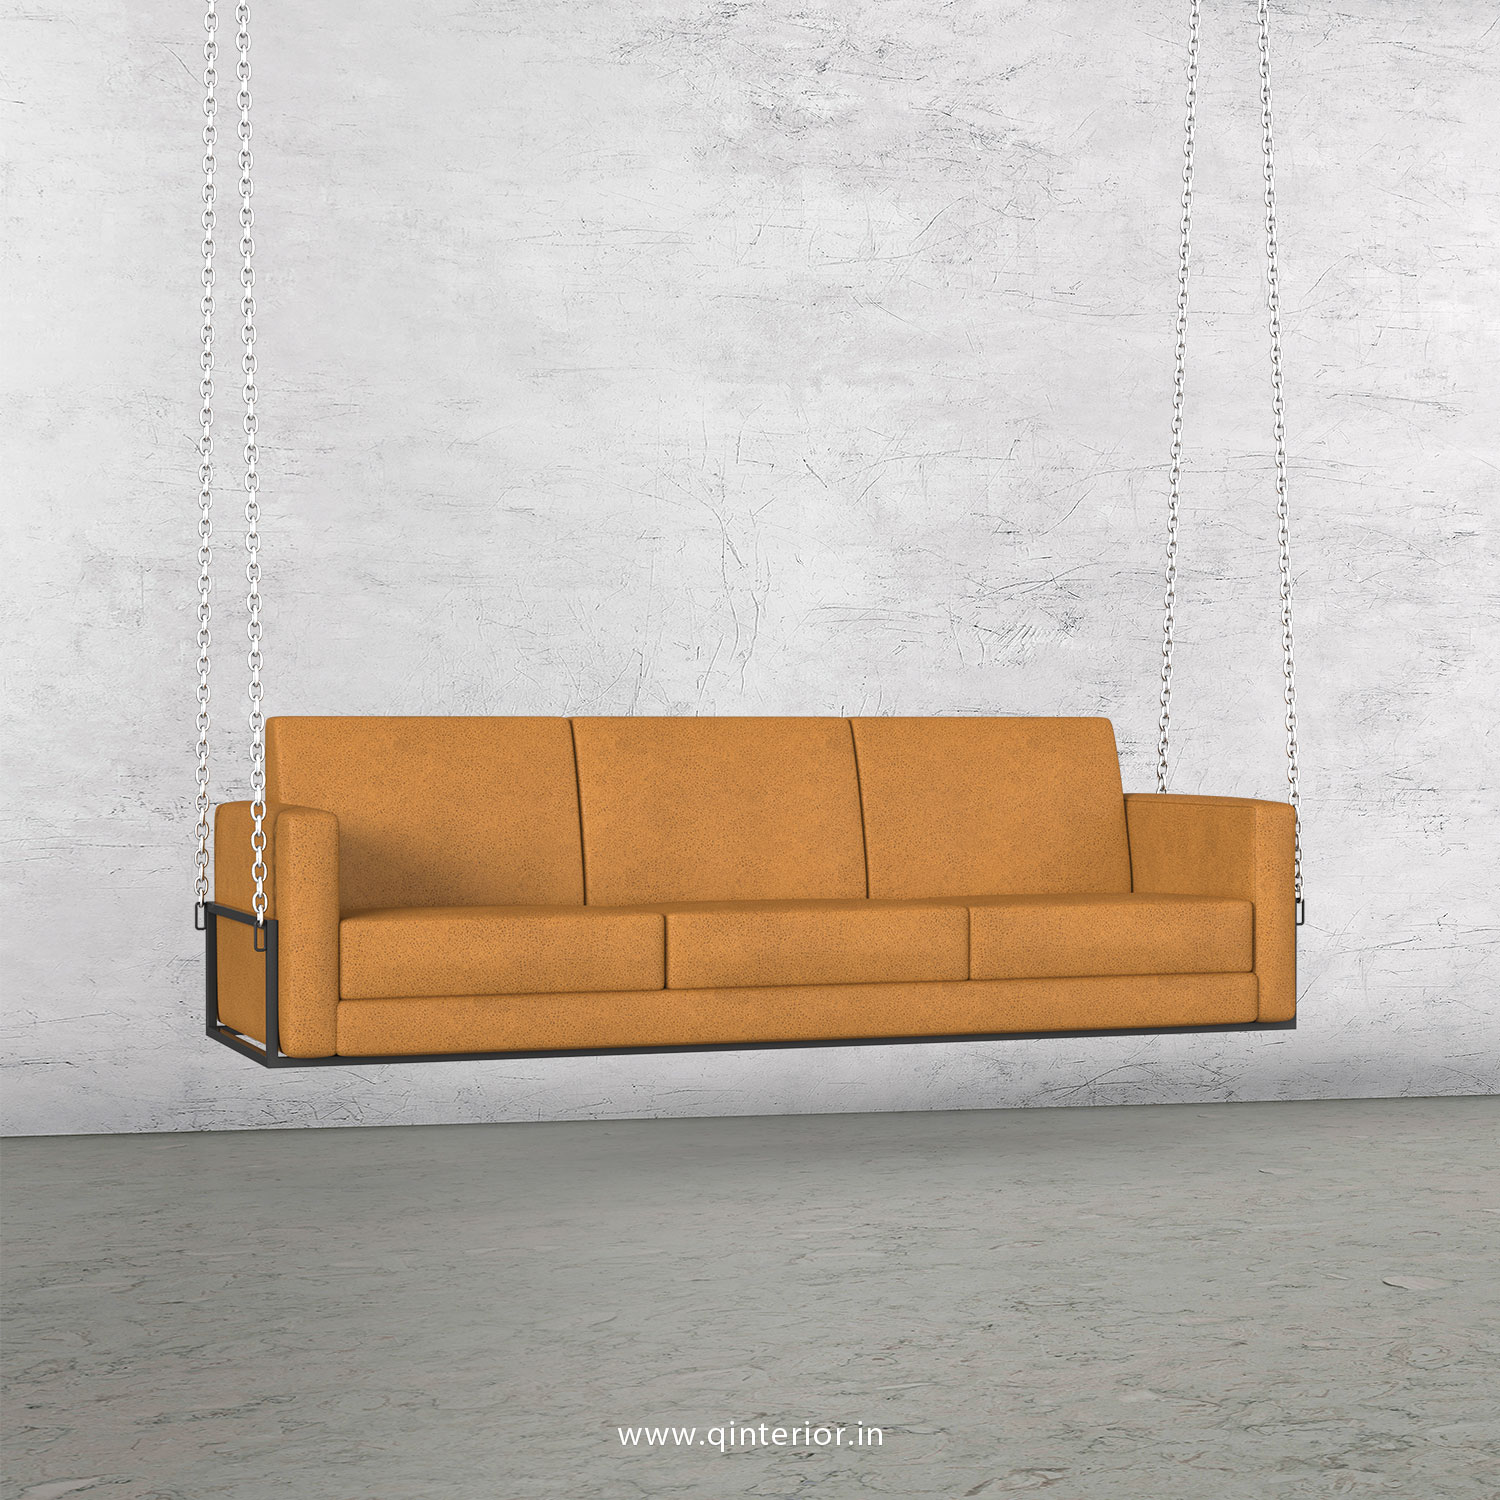 NIRVANA 3 Seater Swing Sofa in Fab Leather Fabric - SSF001 FL14